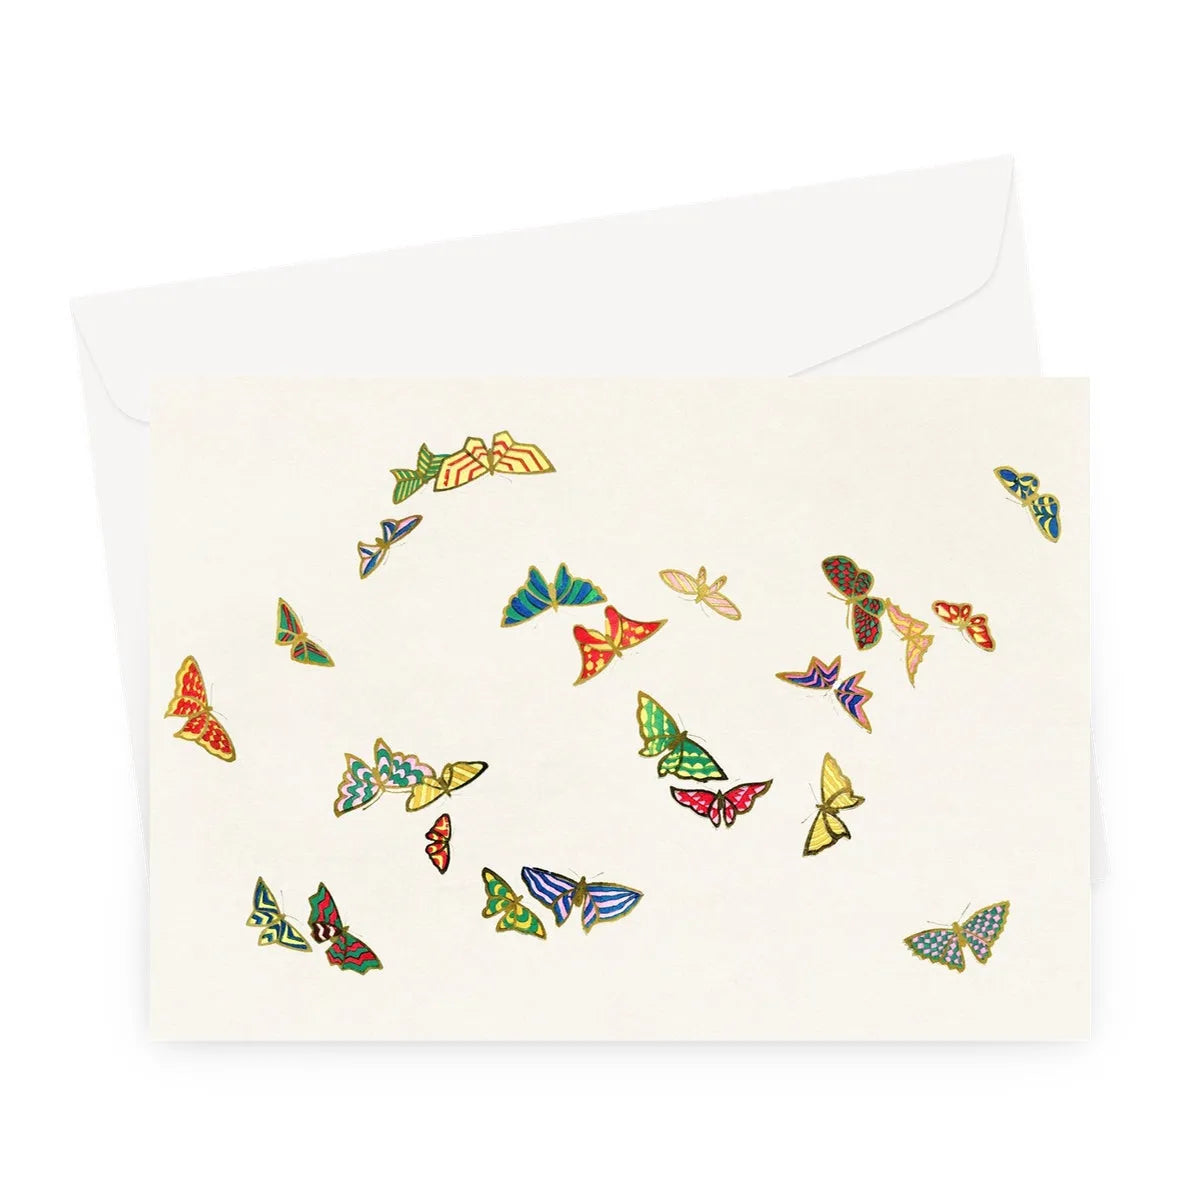 Japanese Rainbow Butterflies By Kamisaka Sekka Greeting Card - A5 Landscape / 1 Card - Greeting & Note Cards